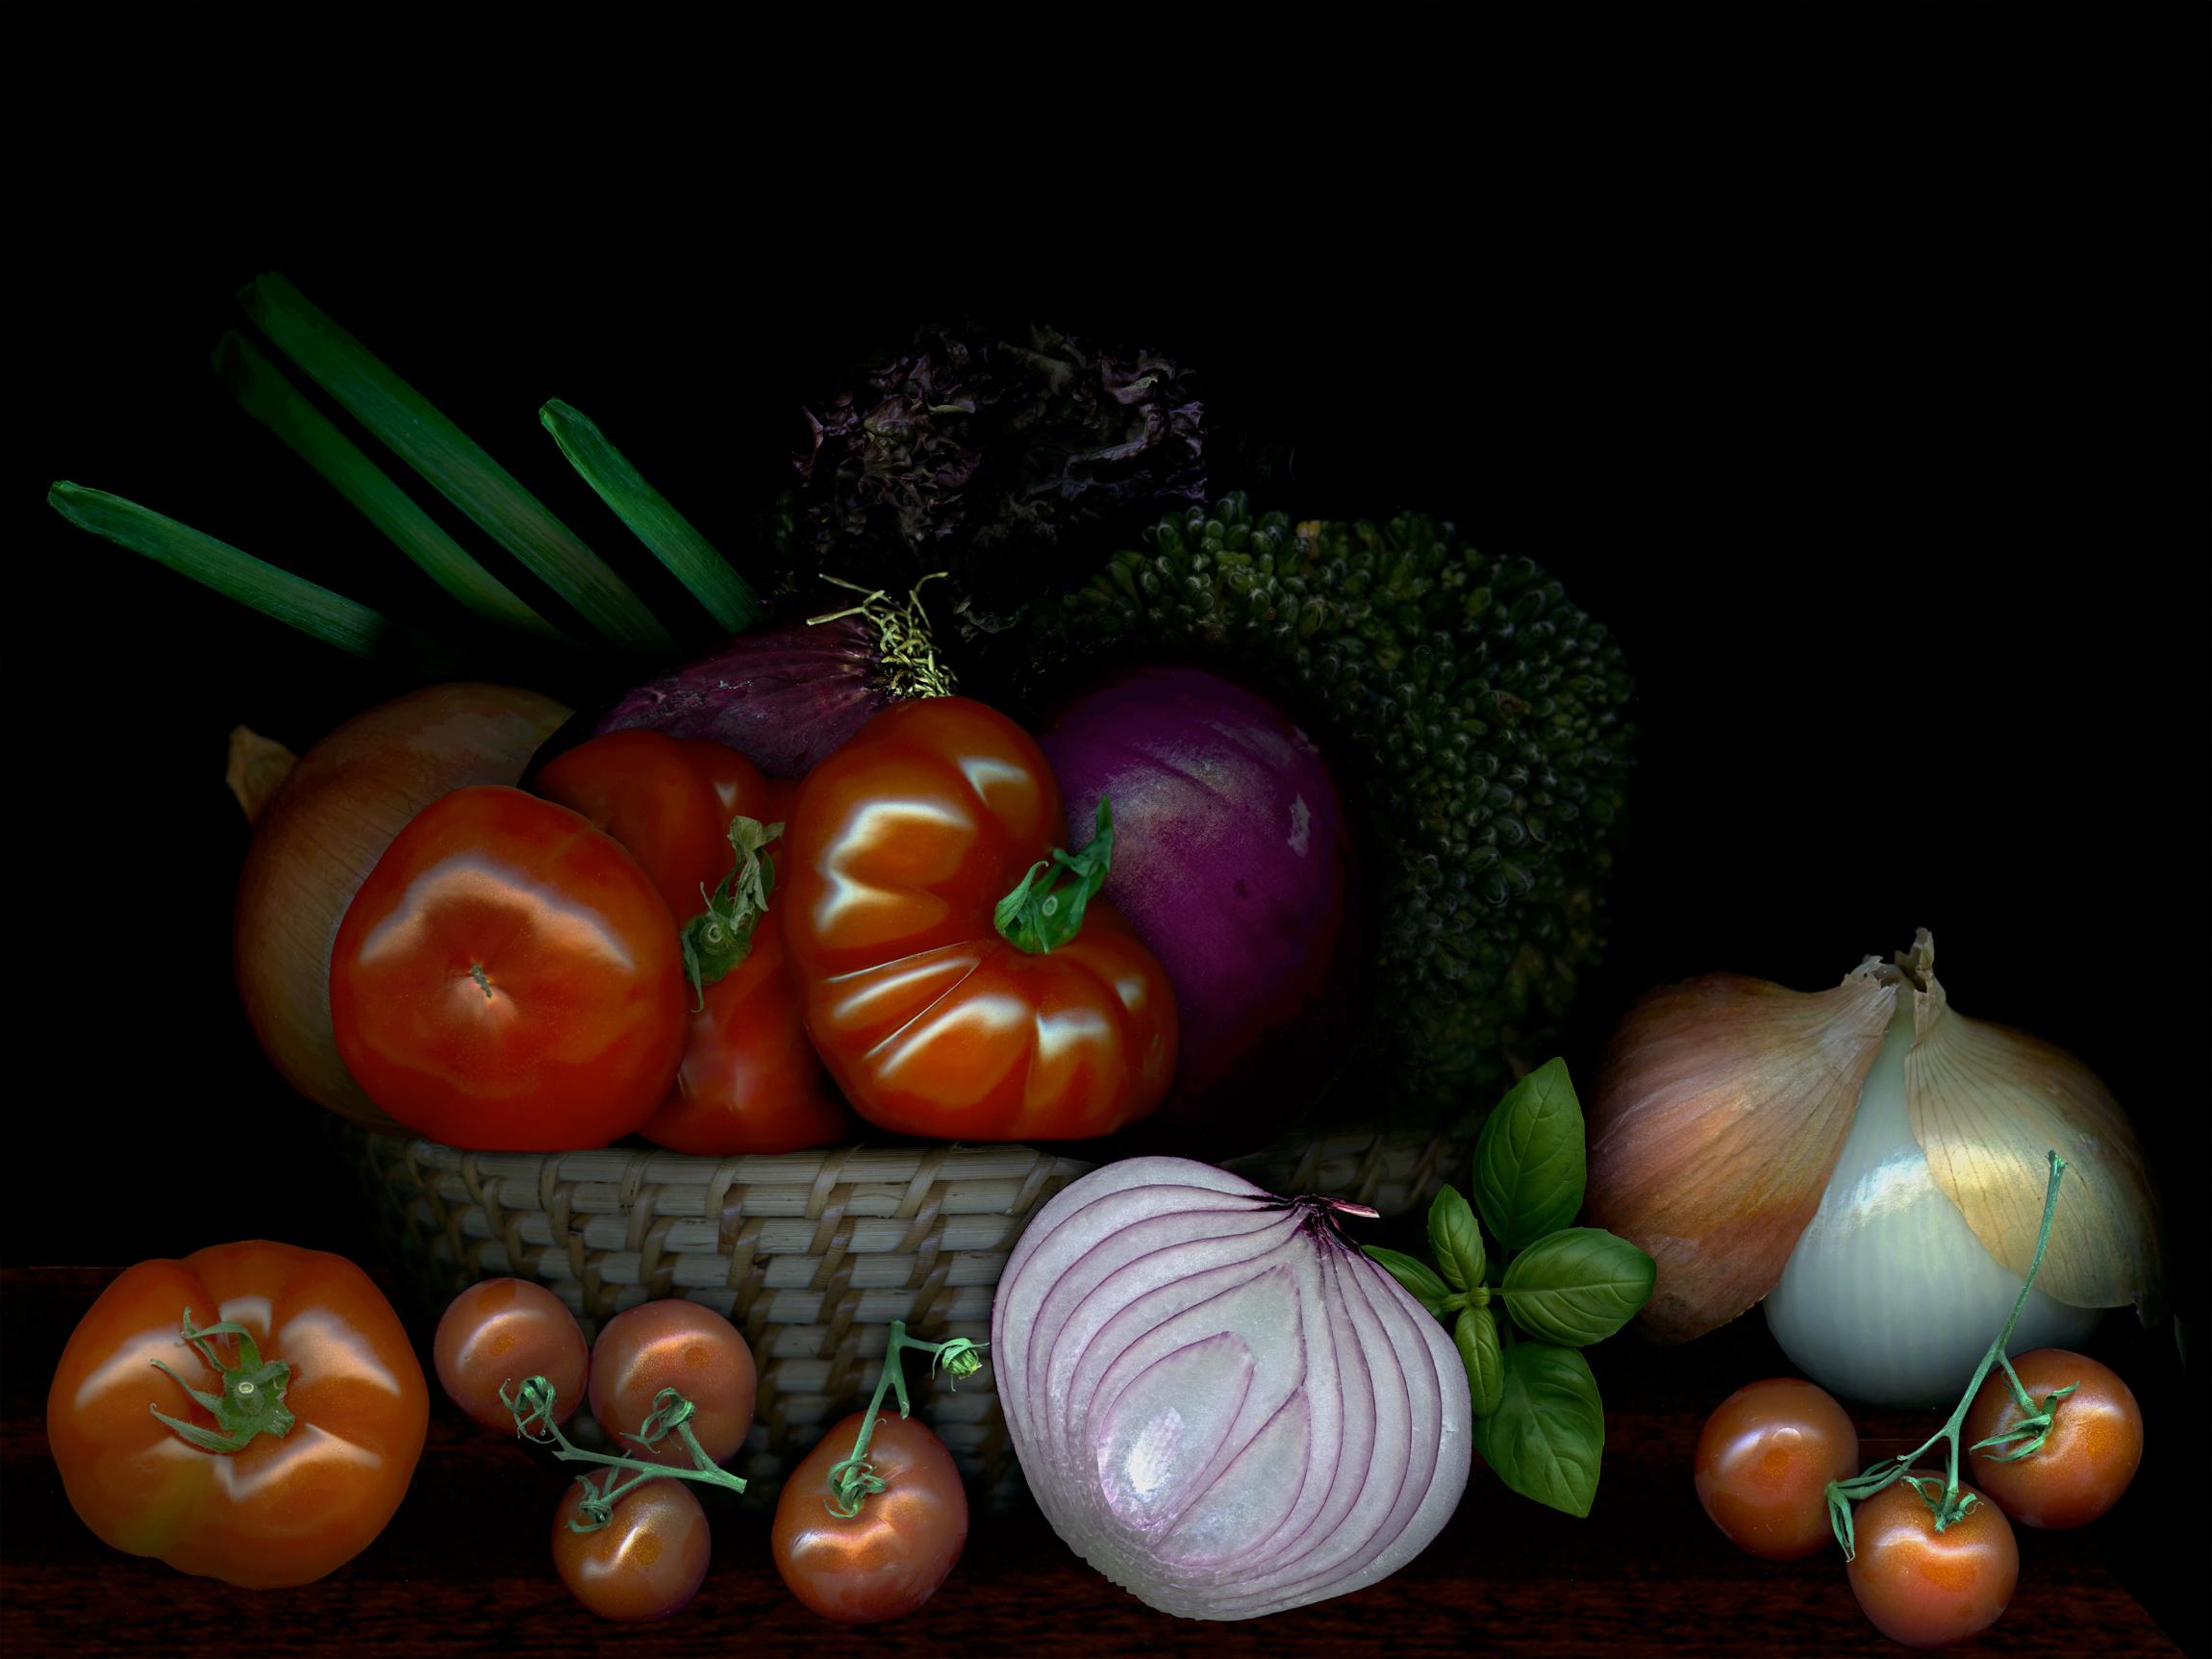 Zoltan Gerliczki Still-Life Photograph - Vegetables from my garden #8 Digital Collage Color Photograph